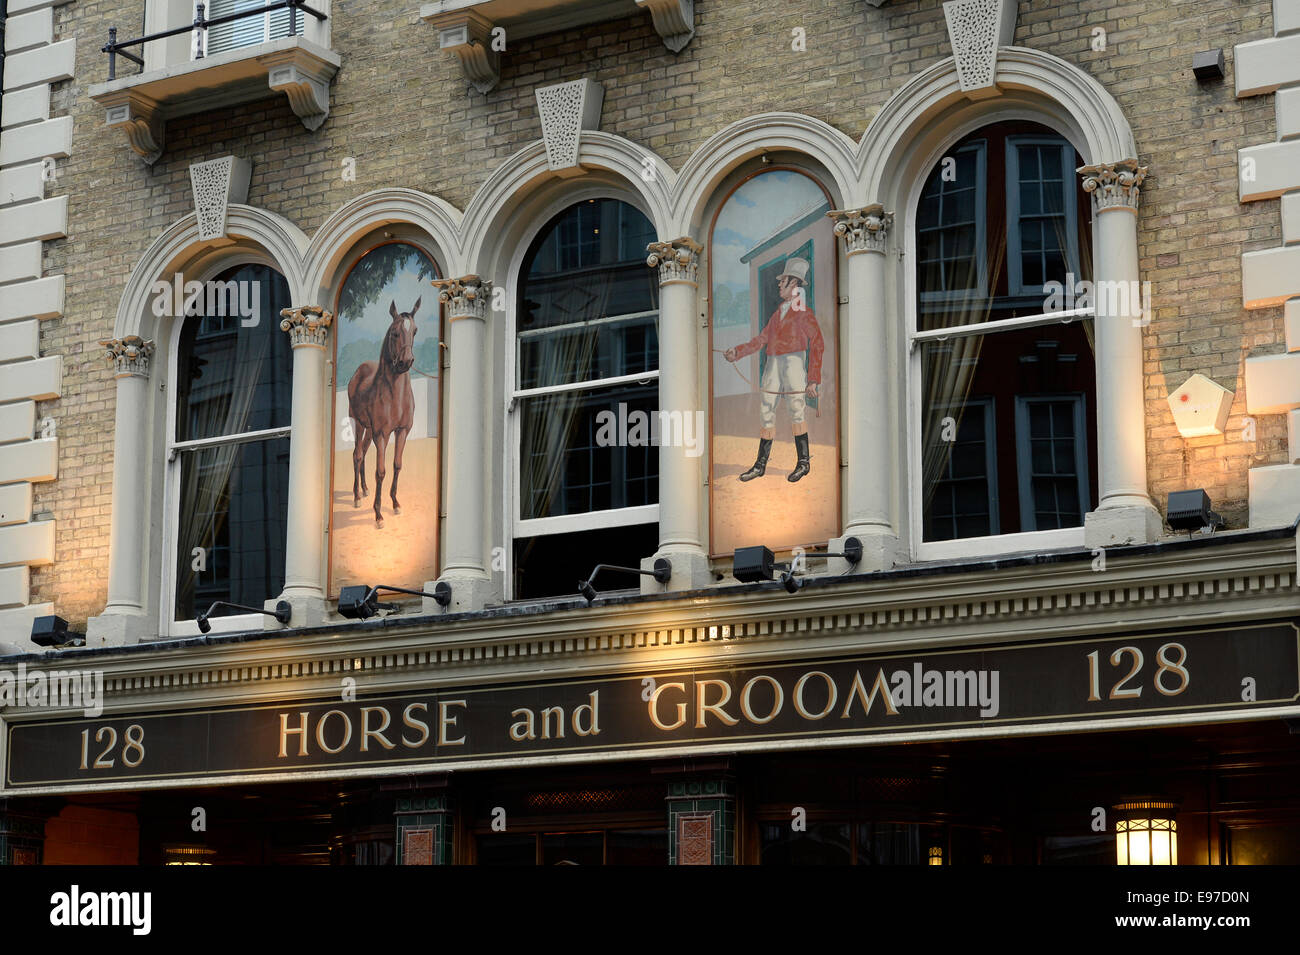 Horse and Groom Public House, 128 Great Portland Street, London, England, UK. Stock Photo